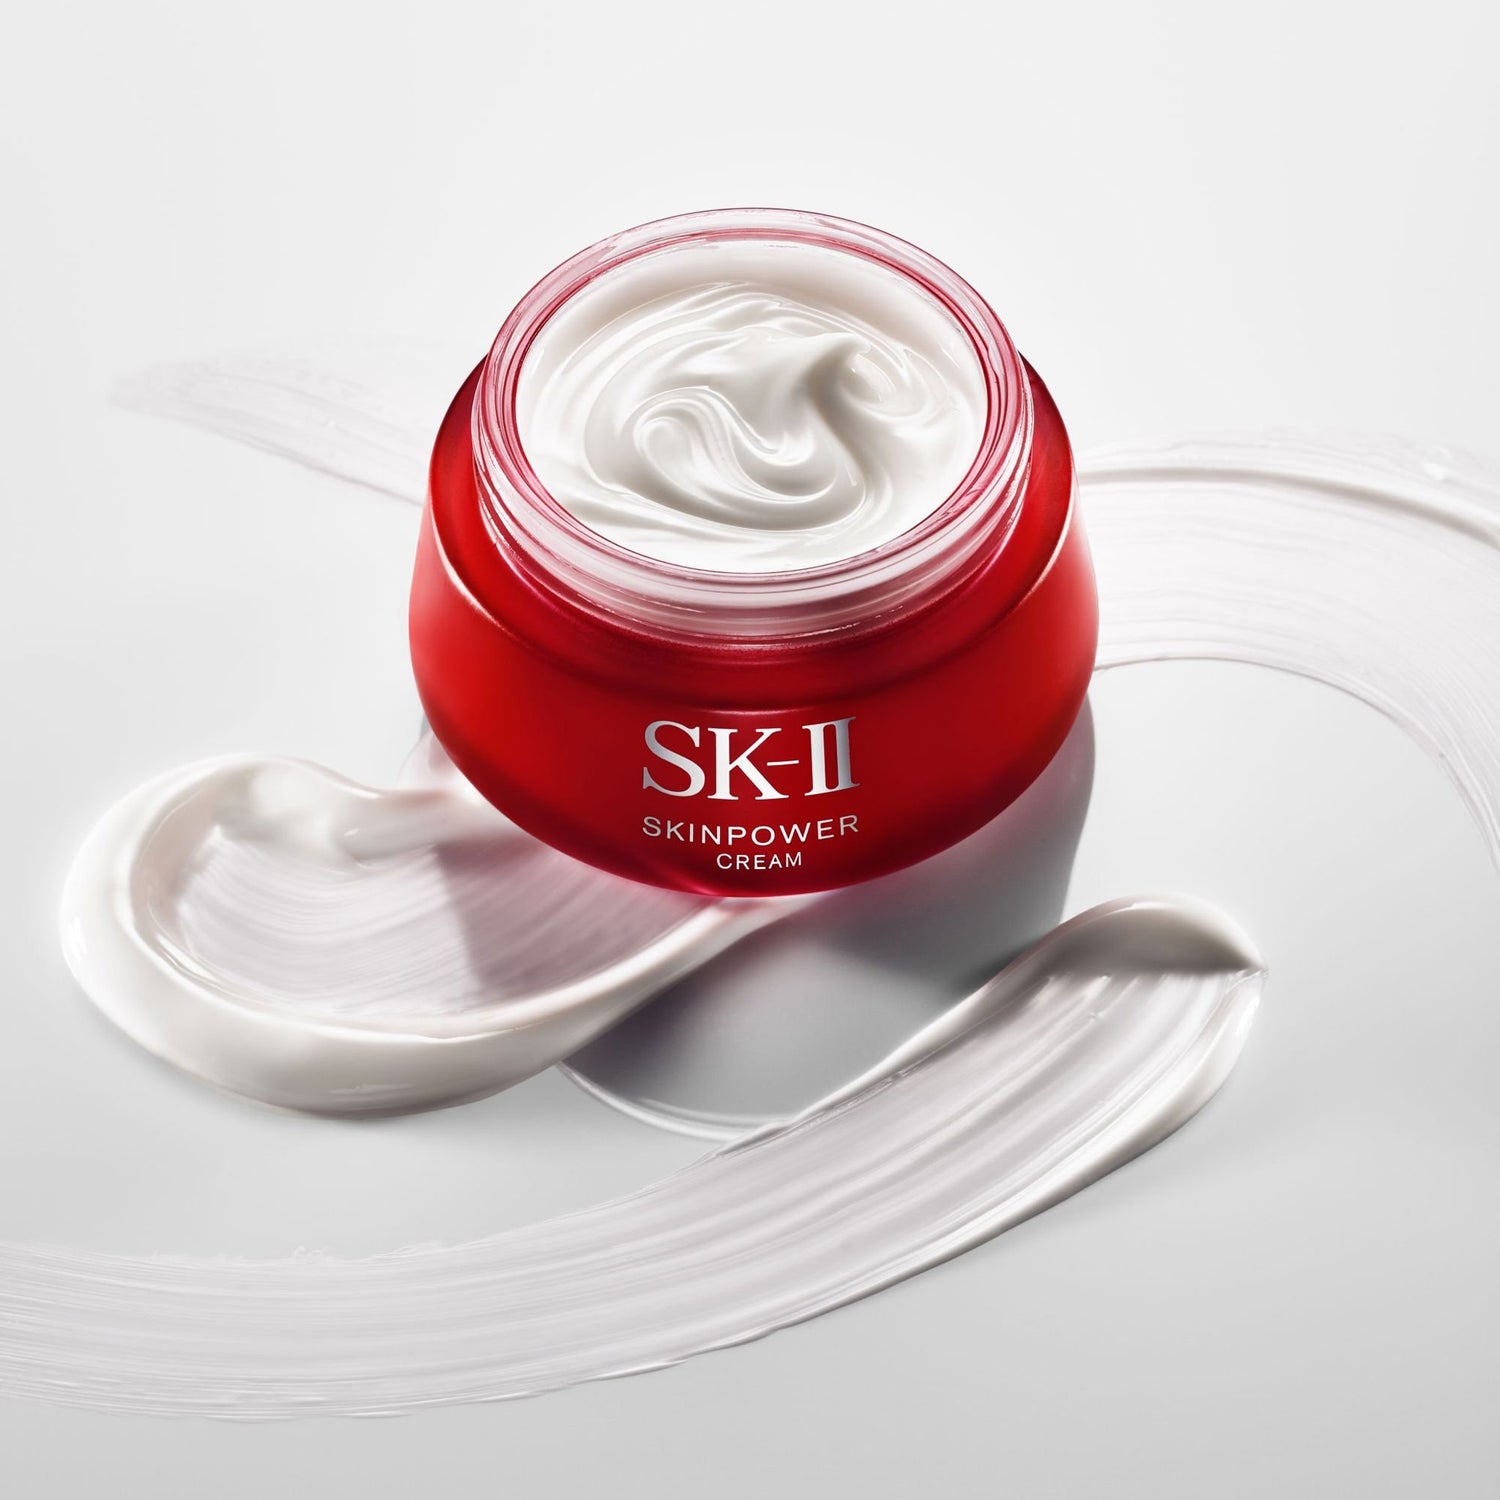 SK-II SkinPower Cream 80g